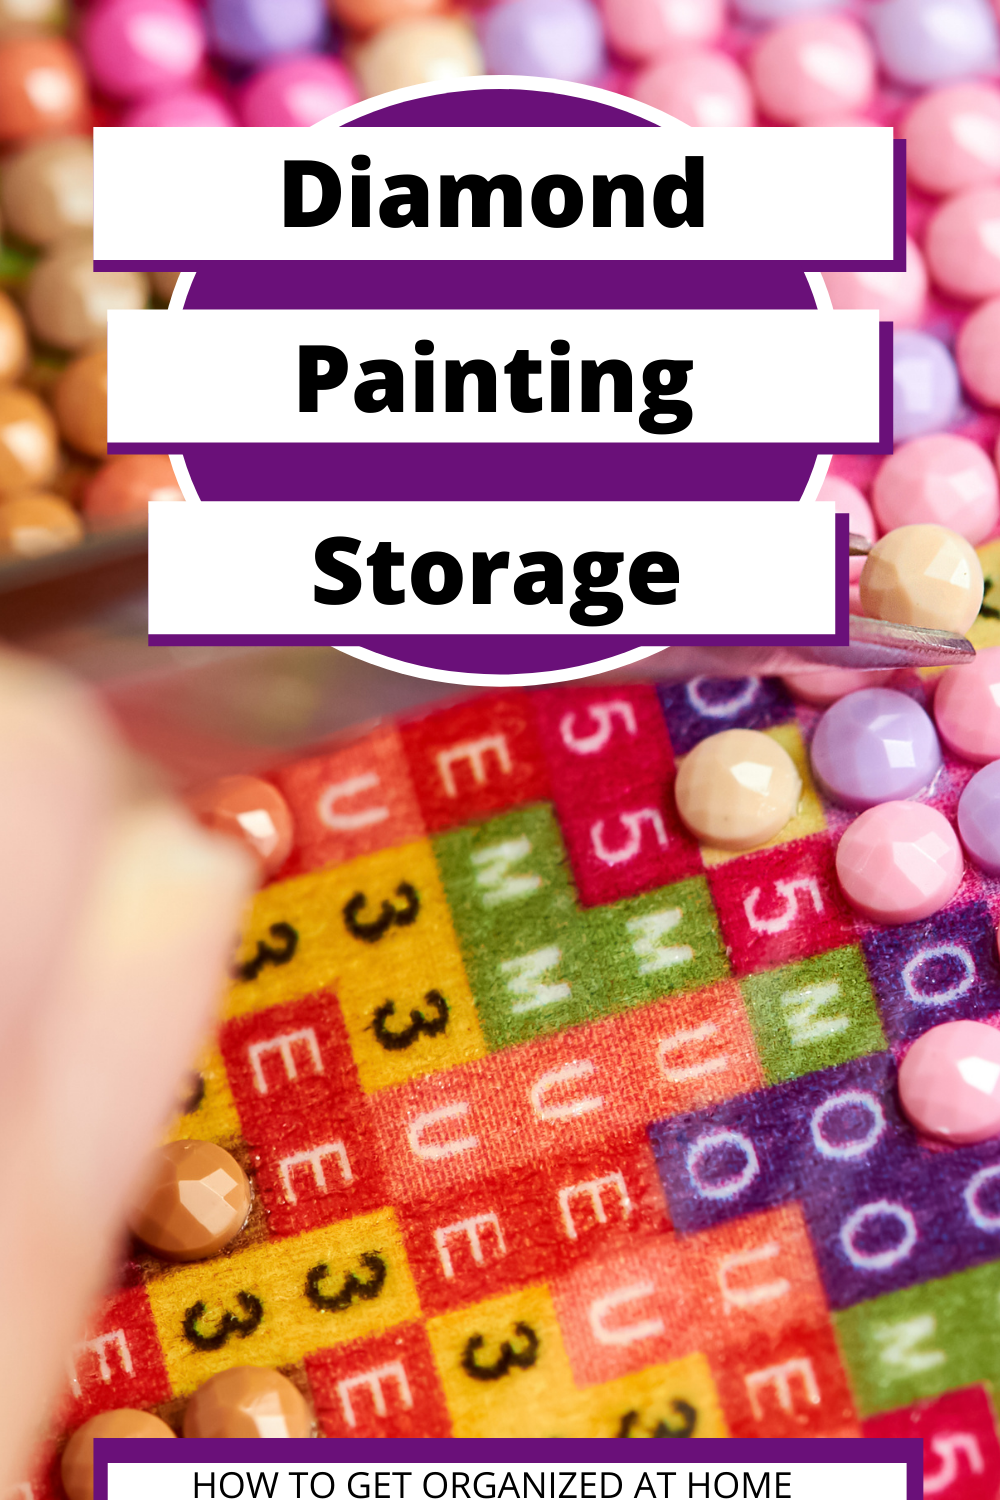 Diamond Painting Storage Set: Organize & Craft with Ease!